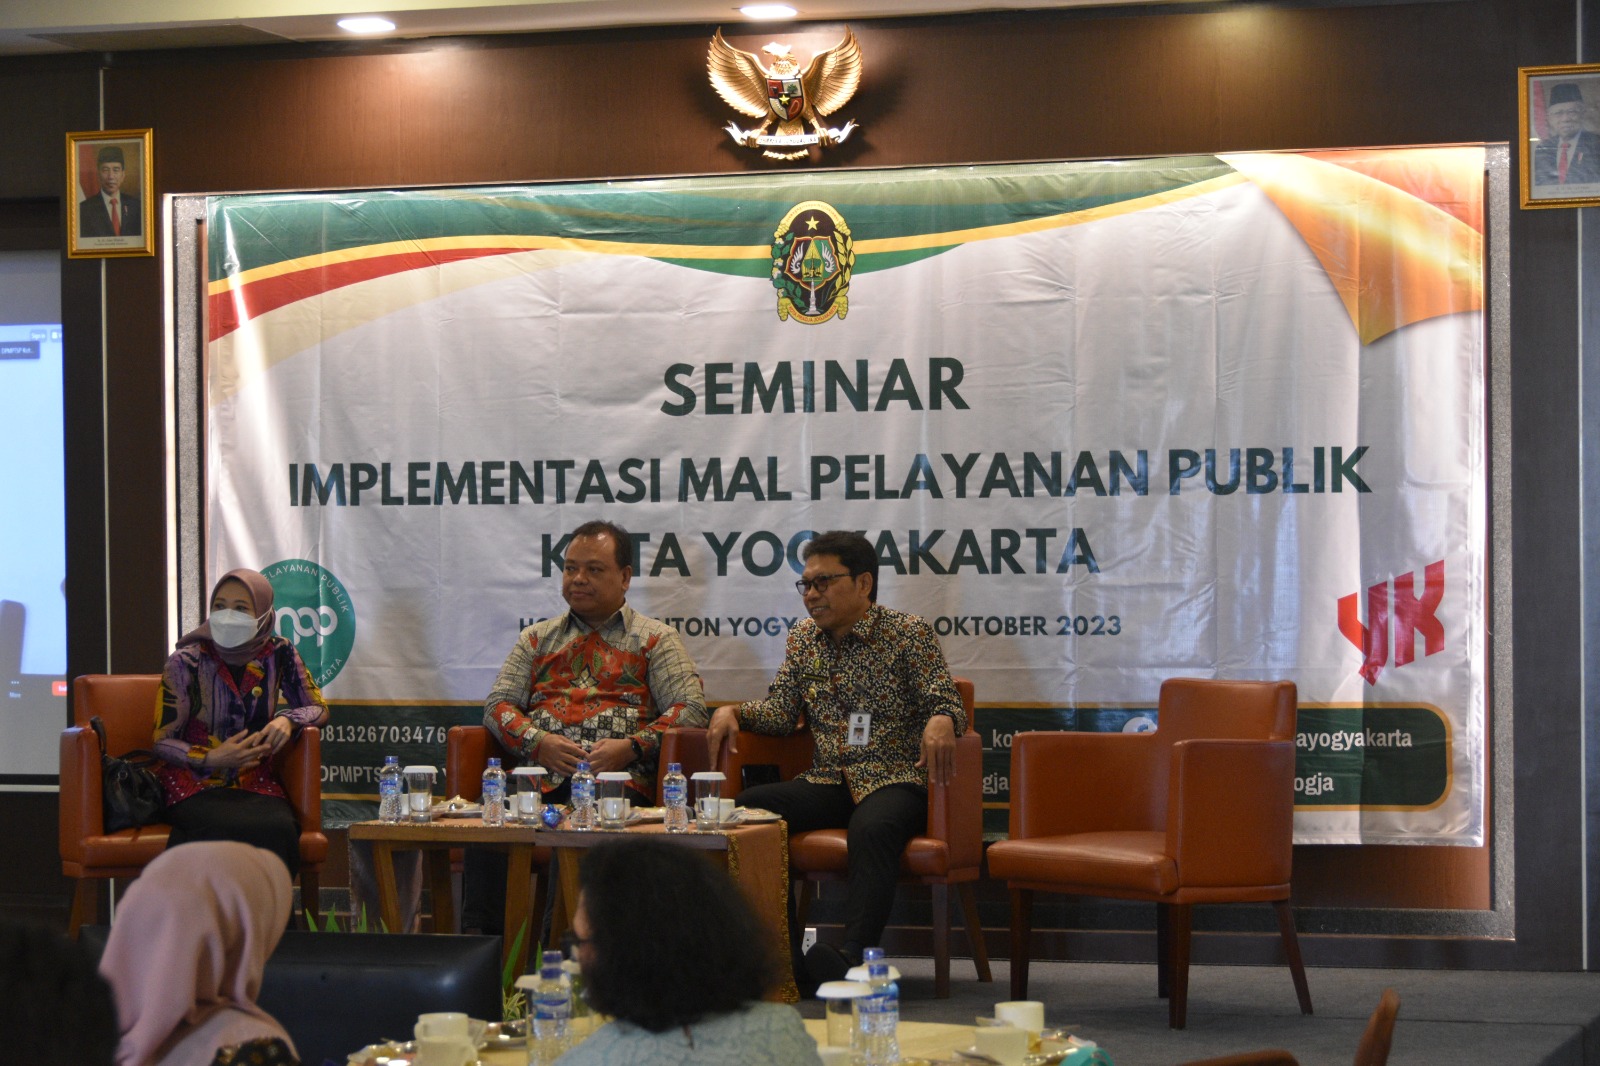 Pengadilan Negeri Yogyakarta Mengikuti Sosialisasi Implementasi Mal Pelayanan Publik Kota Yogyakarta